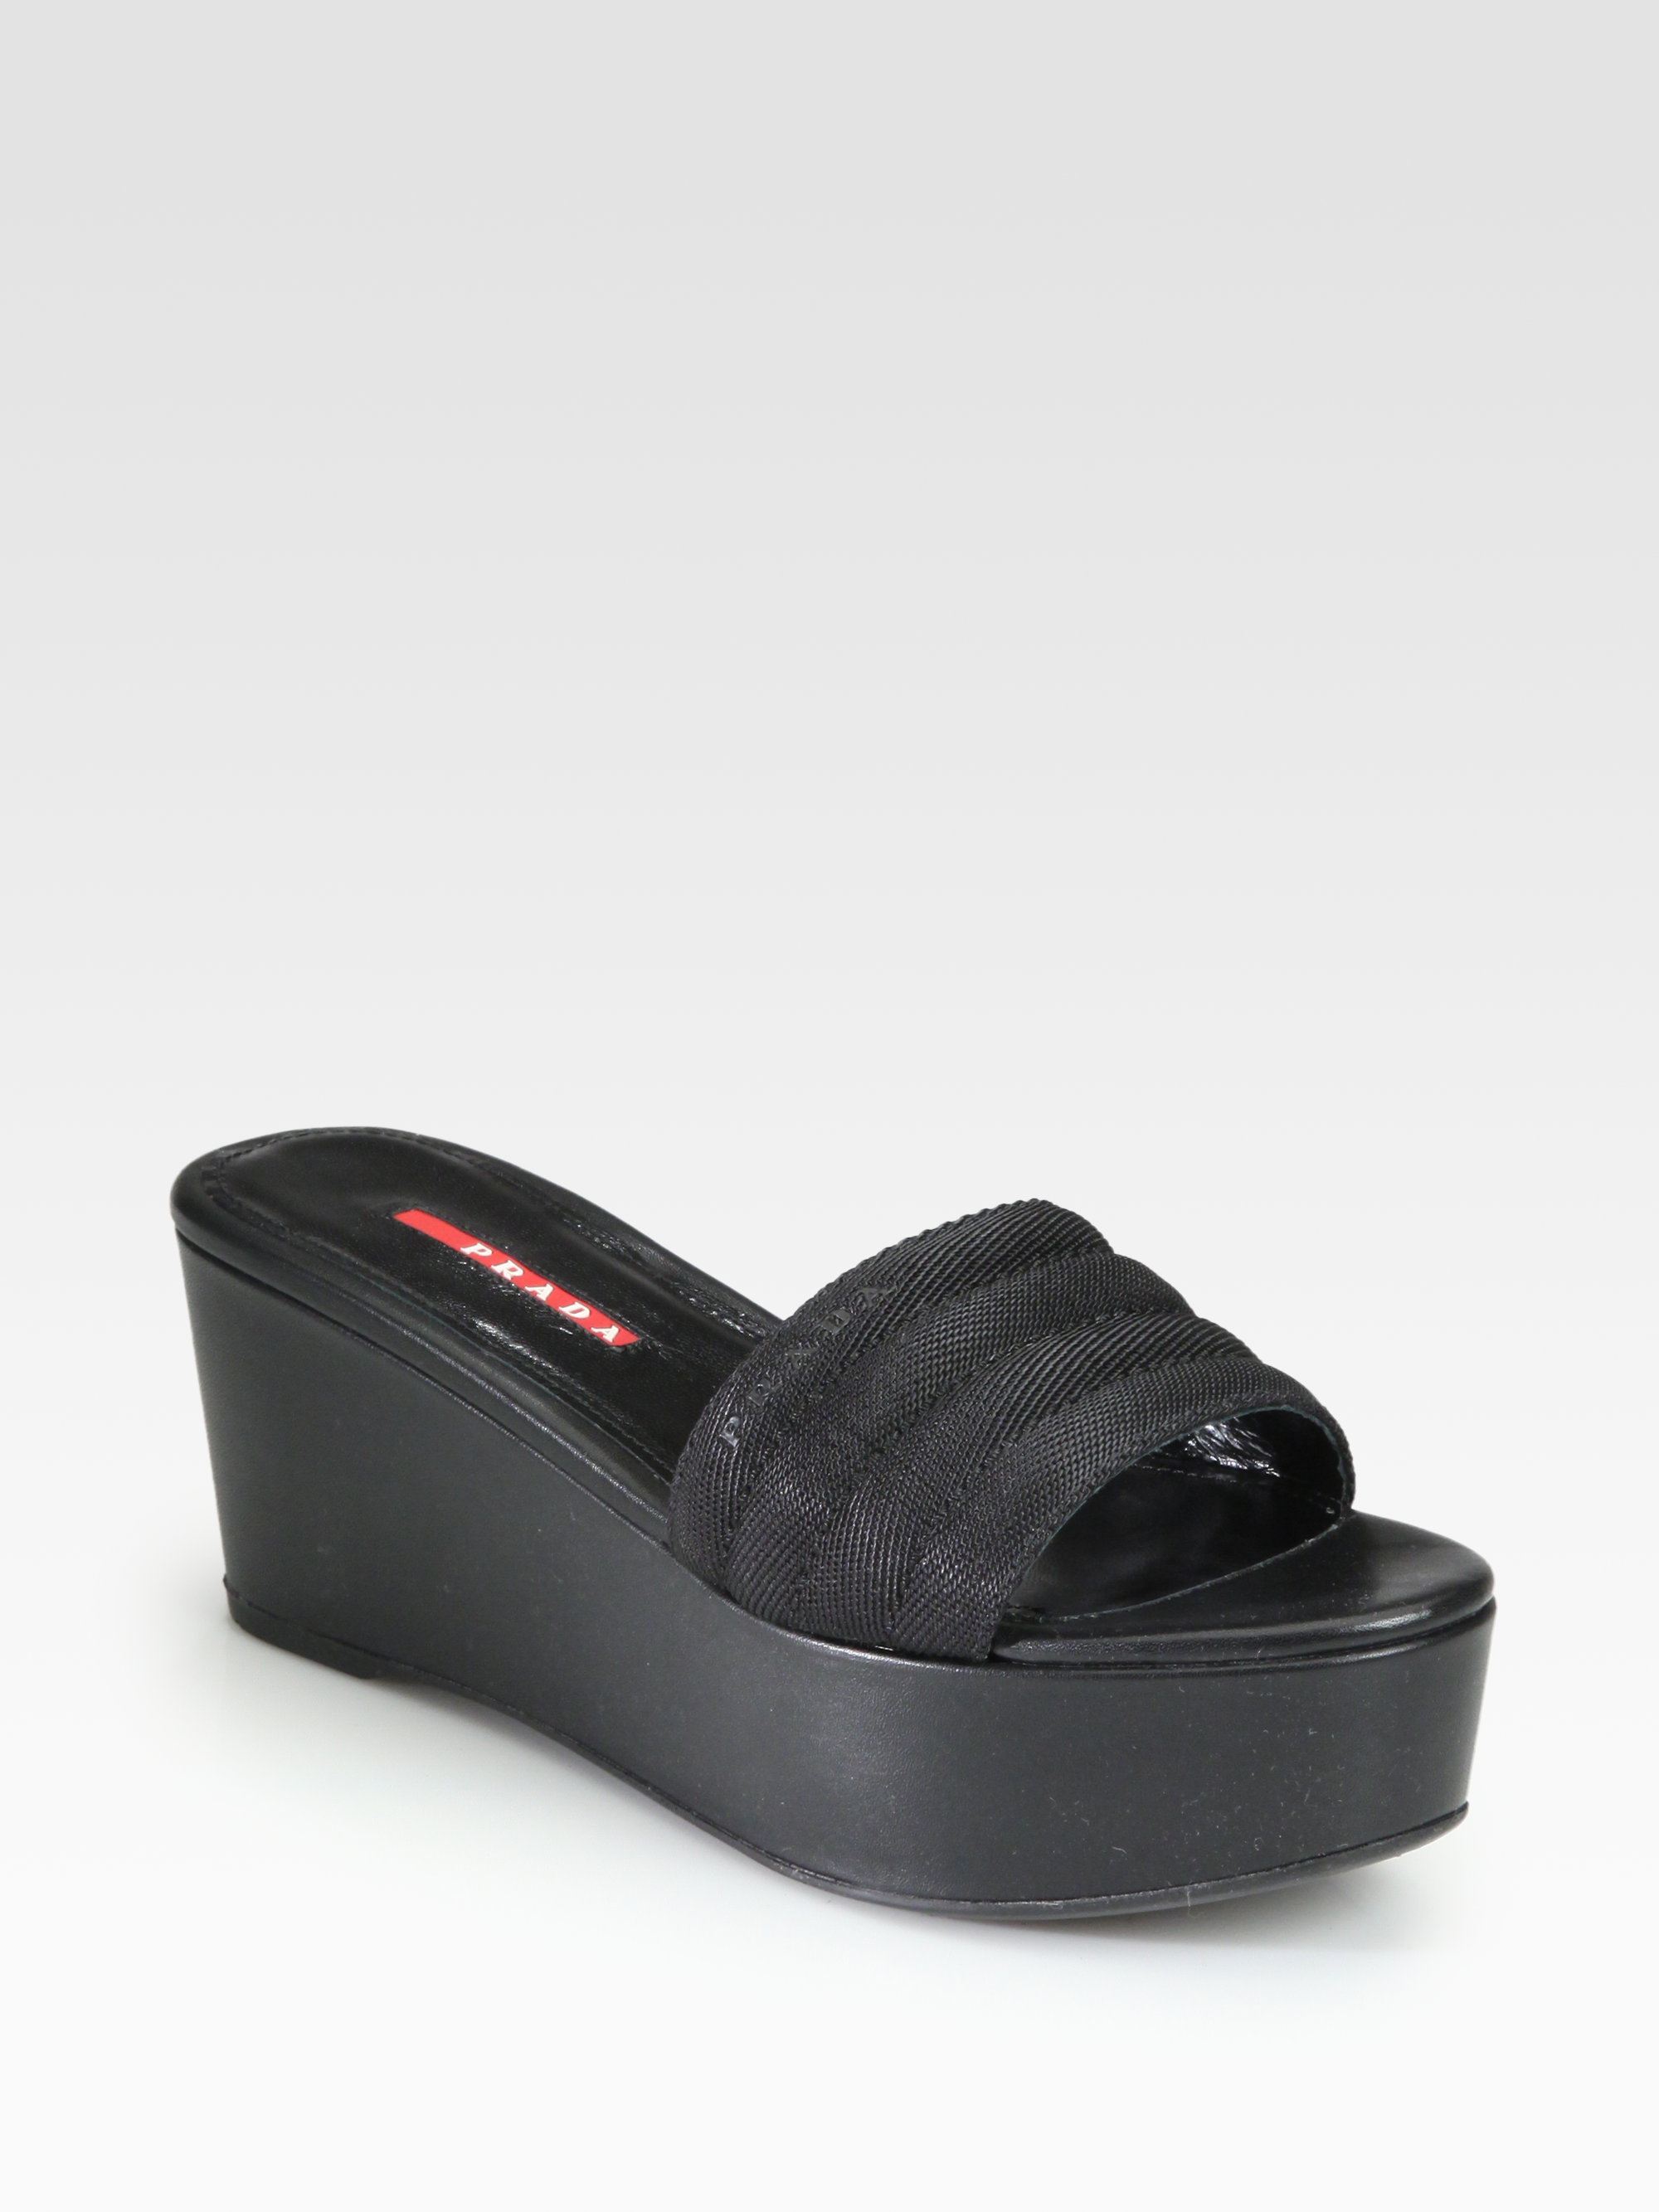 Prada Mesh Leather Wedge Slide Sandals 